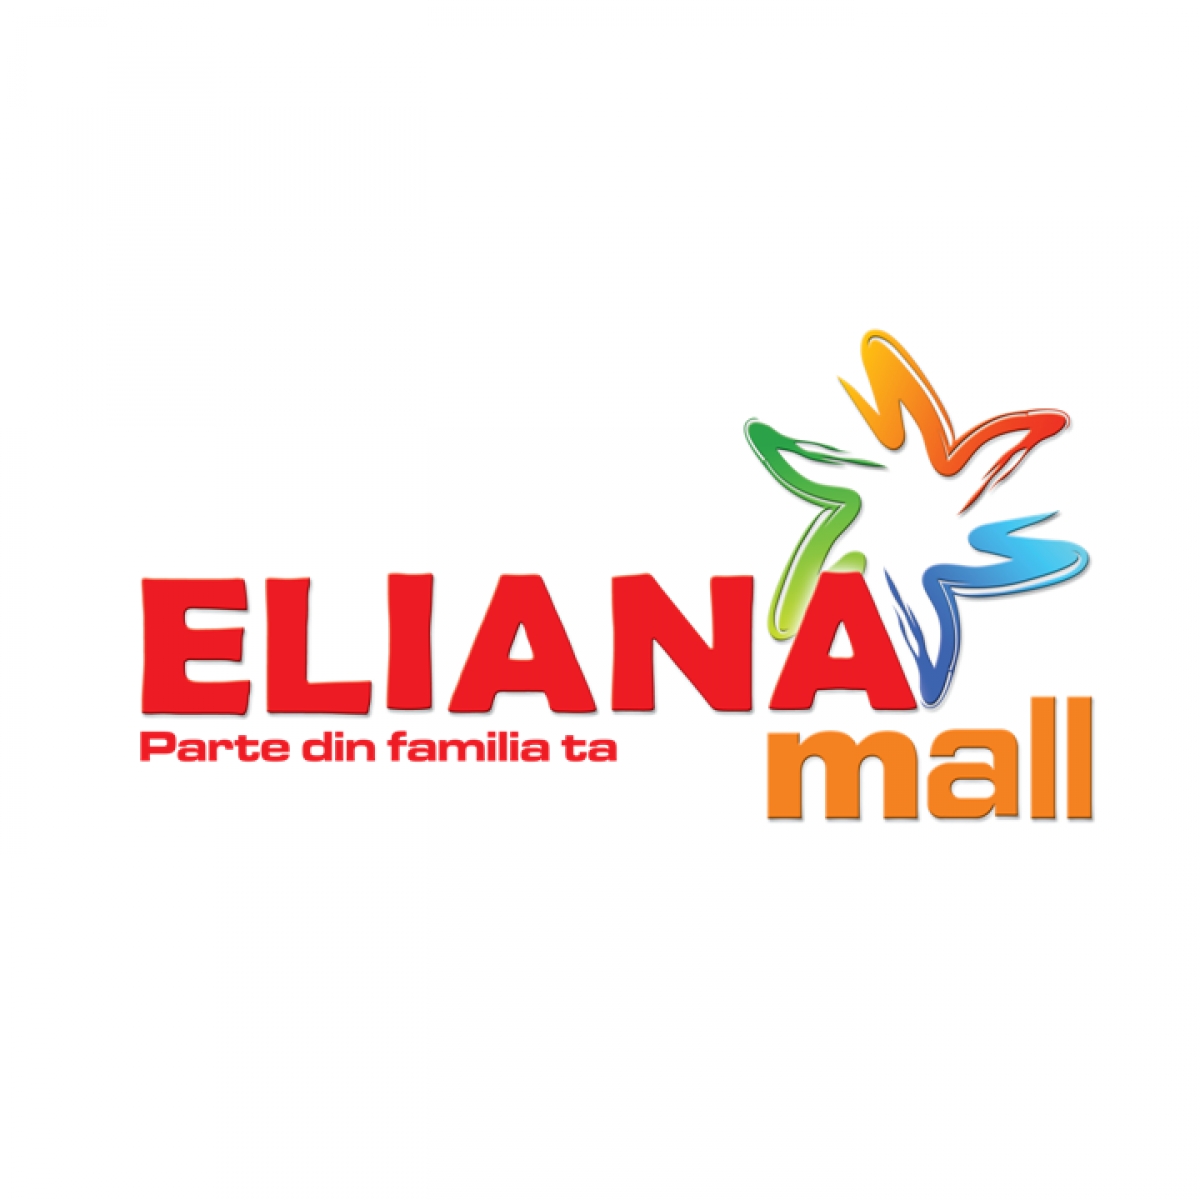 Gala Ballroom- Eliana Mall